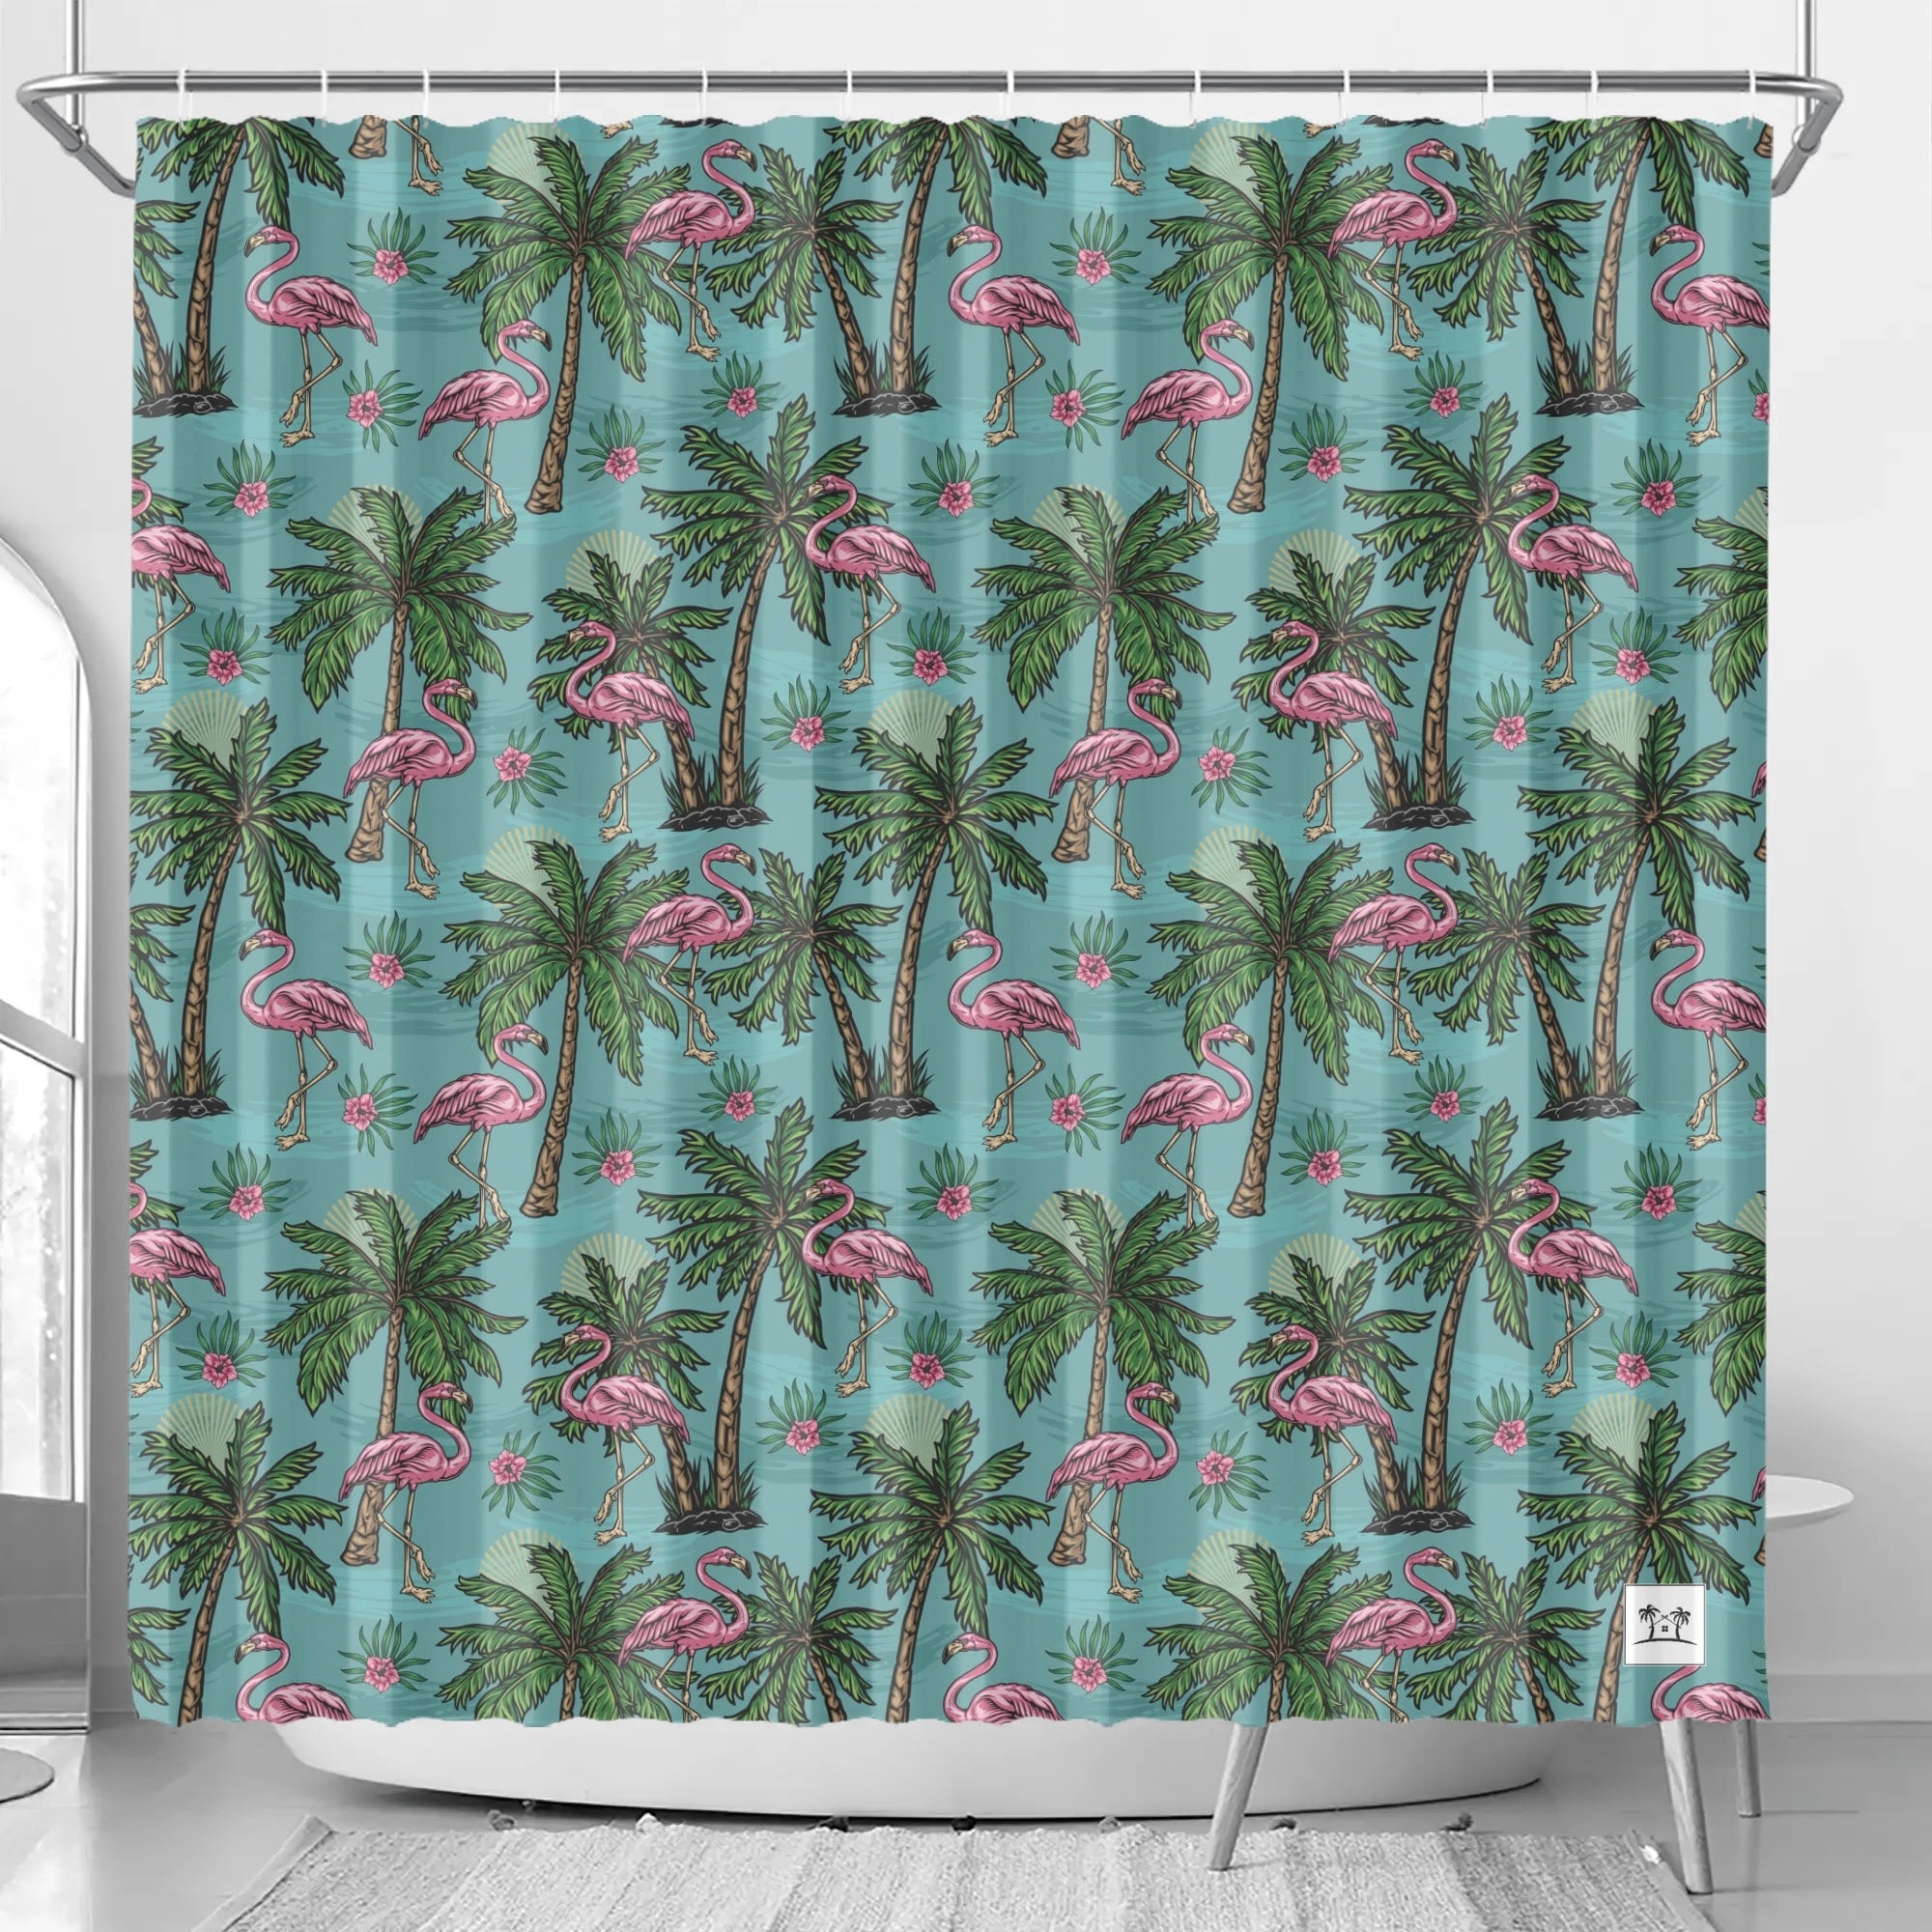 Waterproof Shower Curtain - Miami Vibes